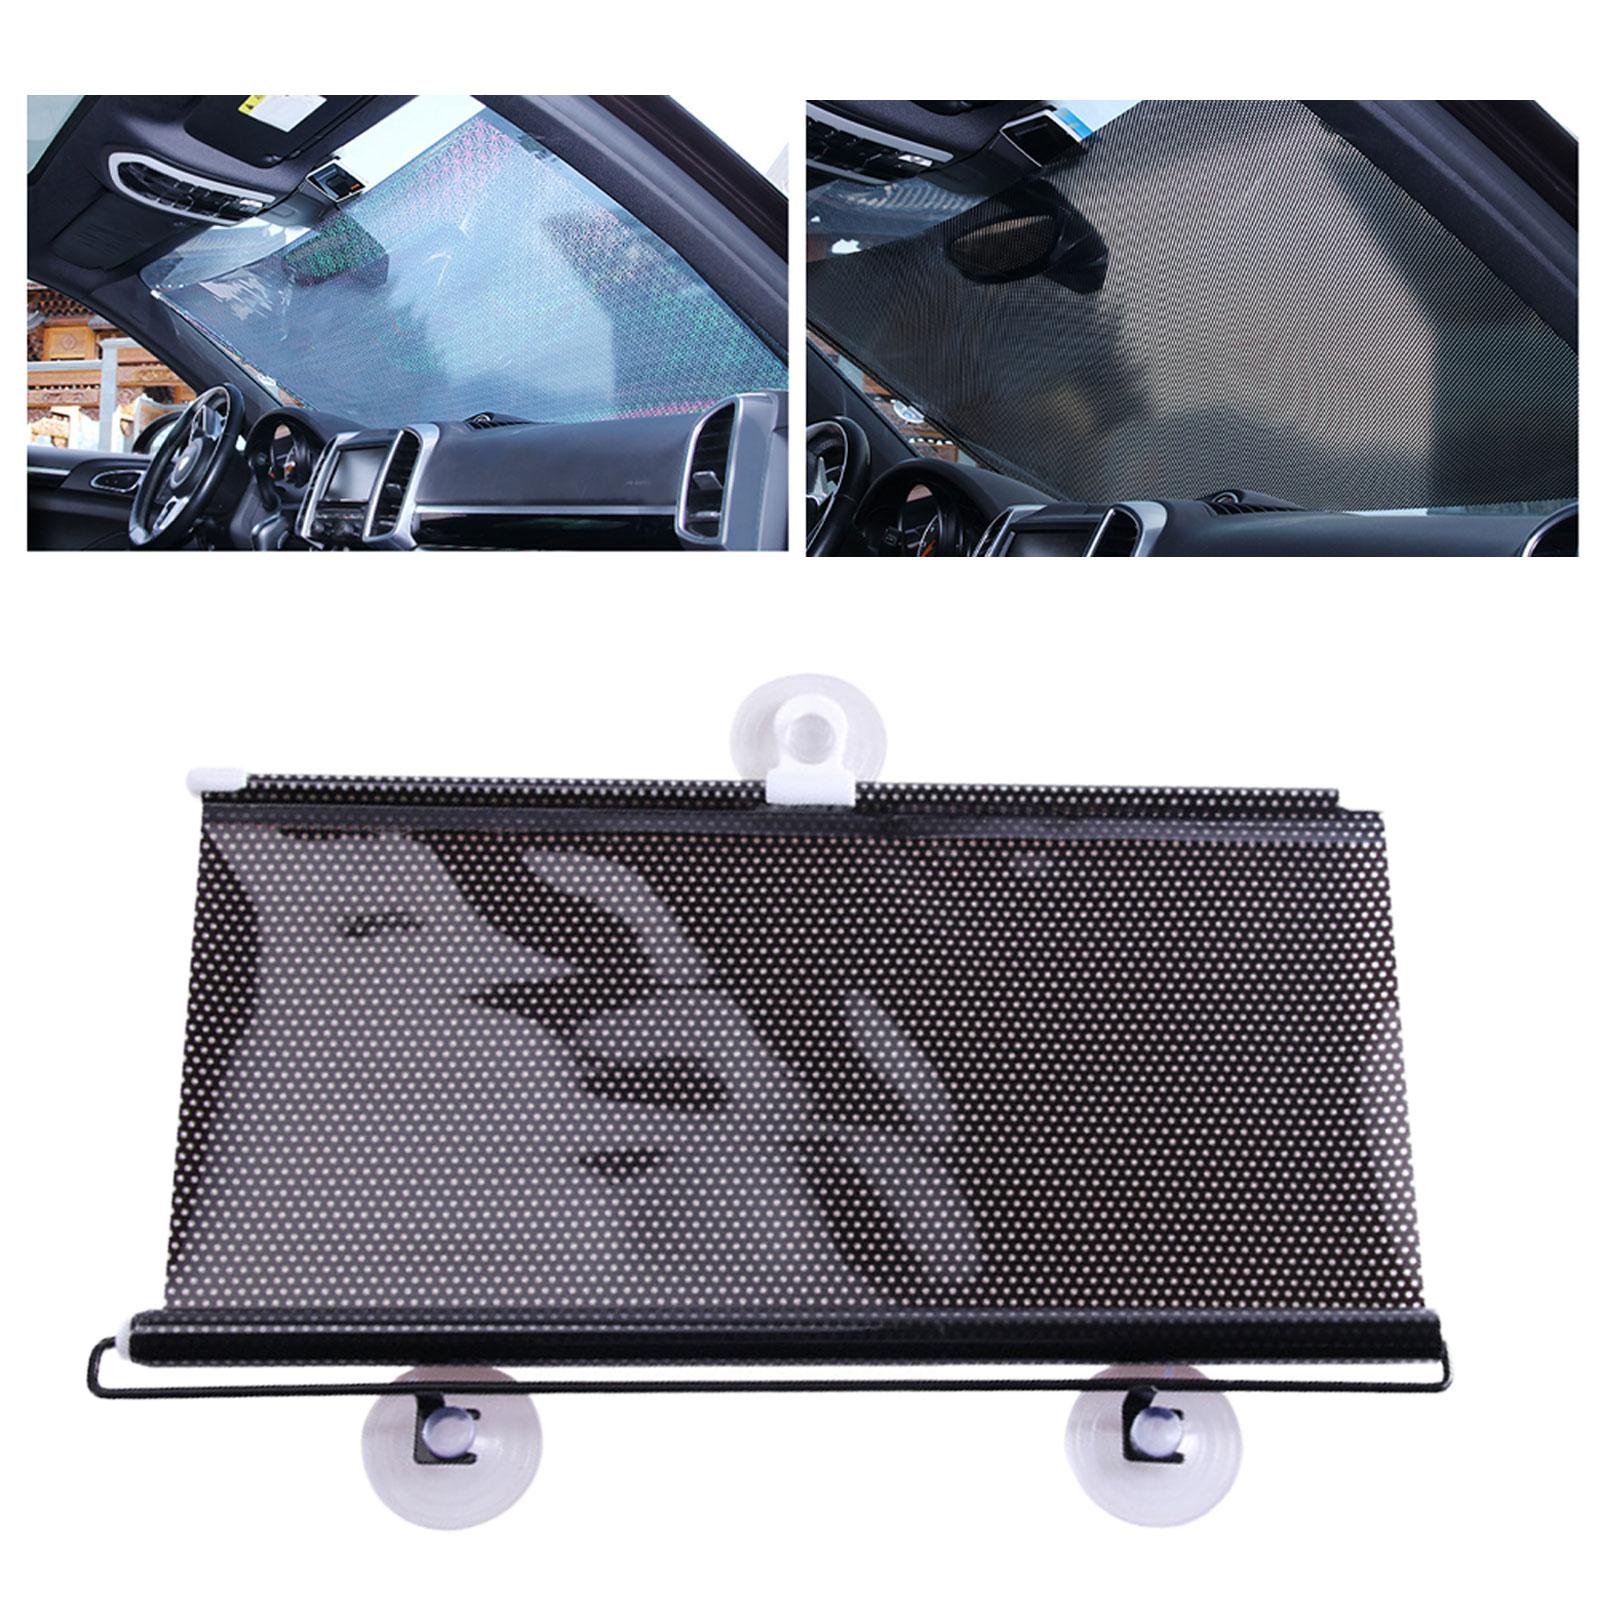 Car Windshield Sunshade Block UV Rays Car Shade for Most Cars, Vehicles 45cmx125cm